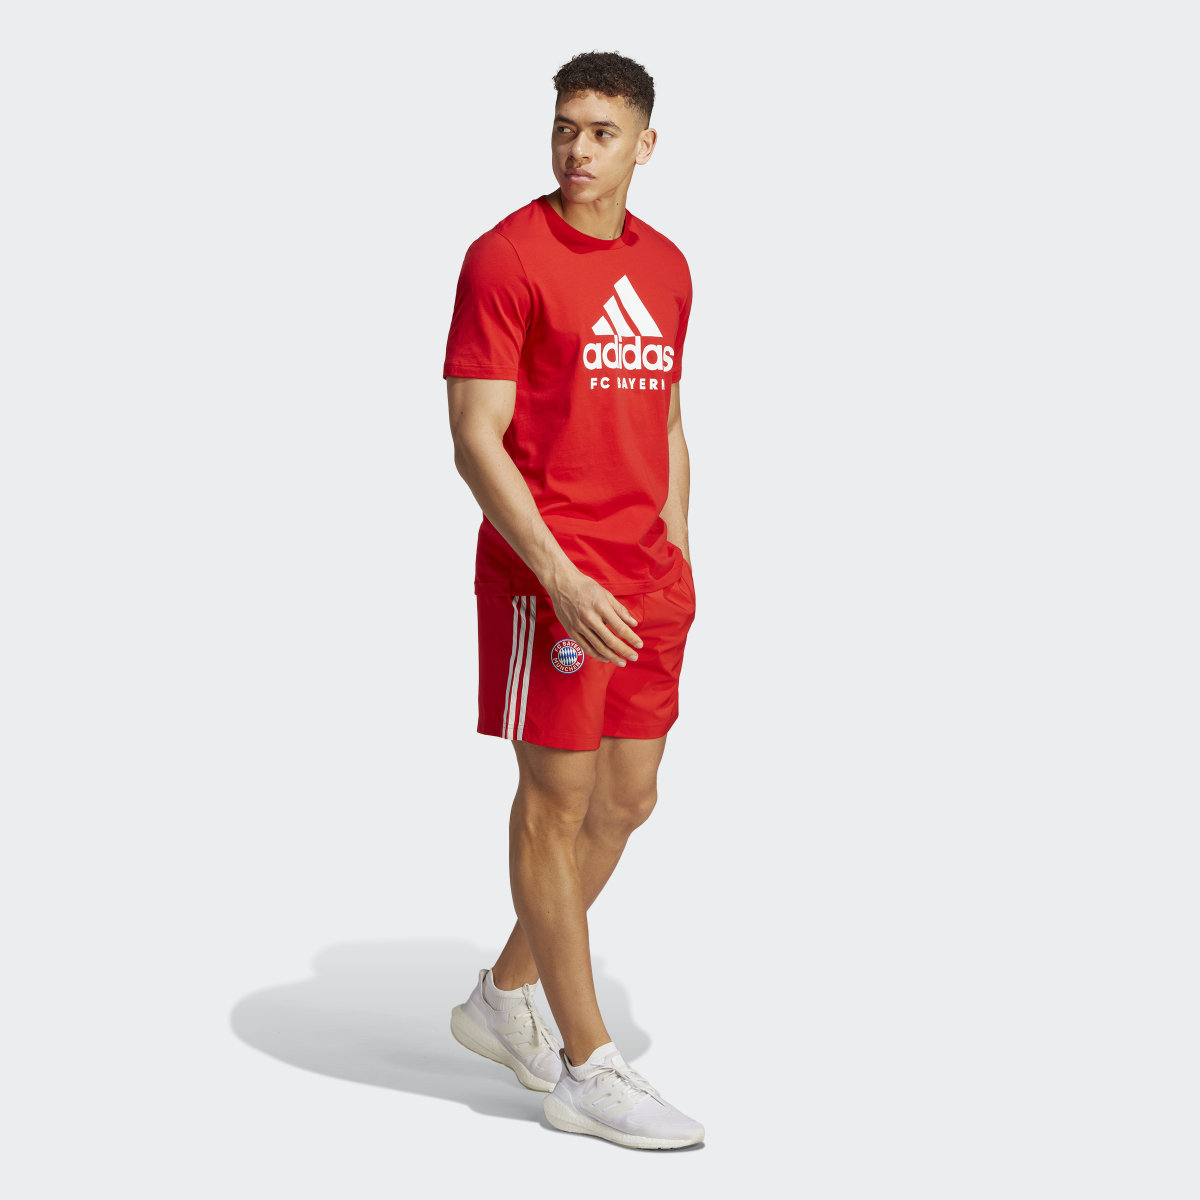 Adidas Camiseta FC Bayern DNA Graphic. 4